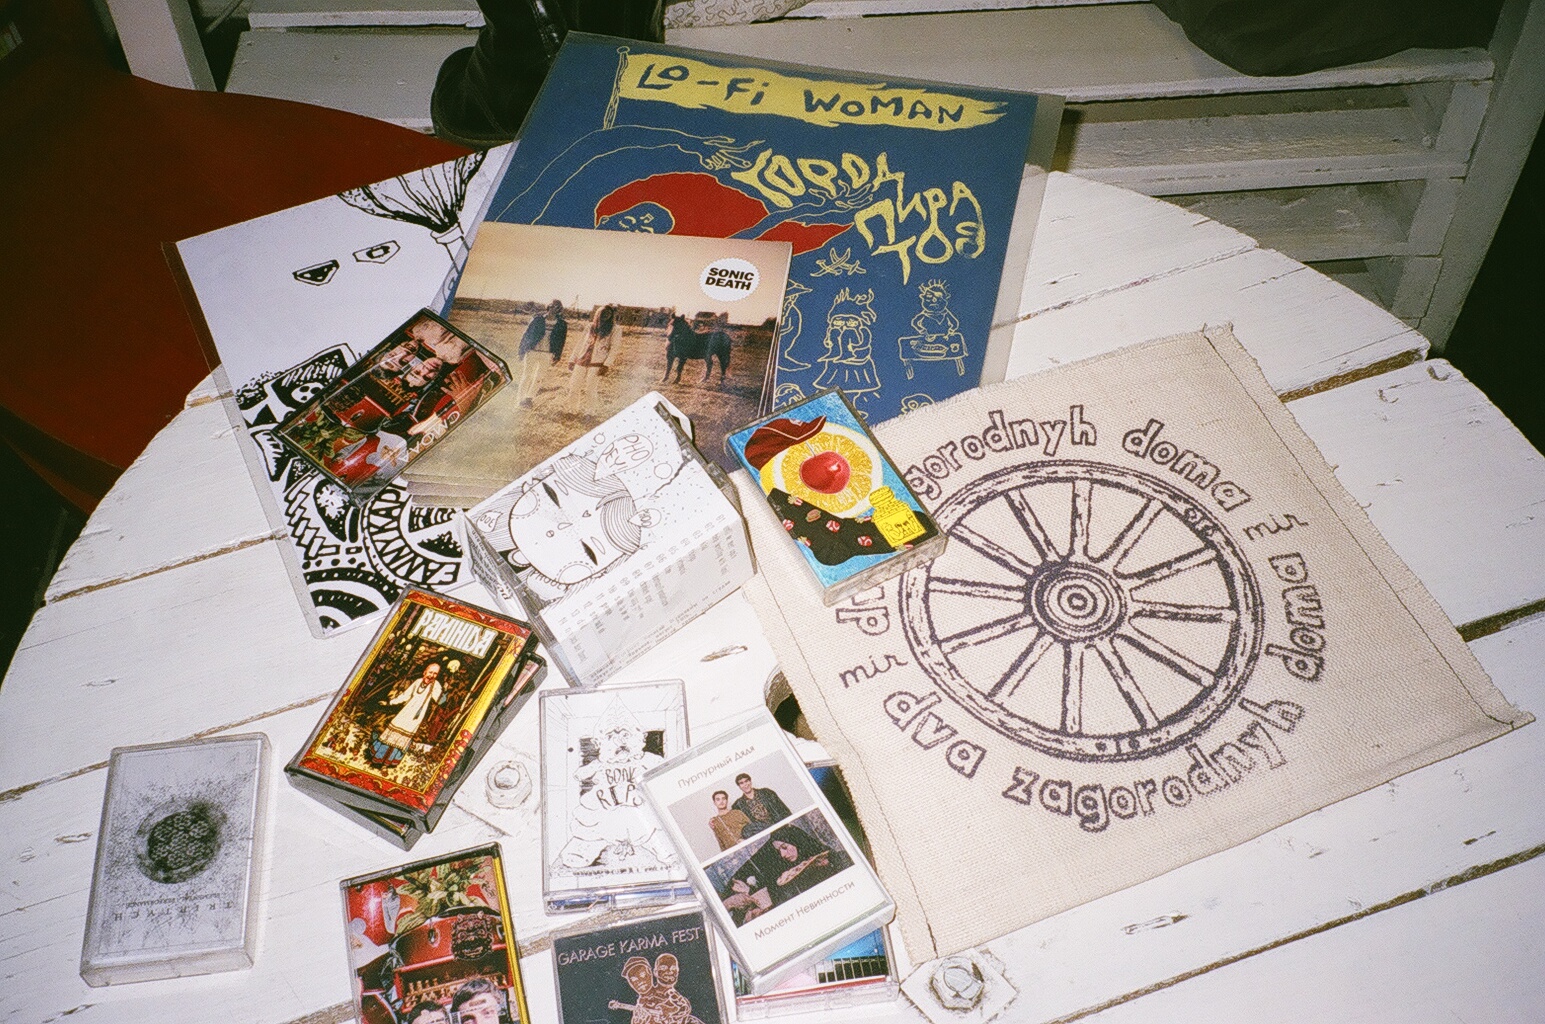 Records and cassettes on display at Garage Karma Store. Image: Sasha Raspopina